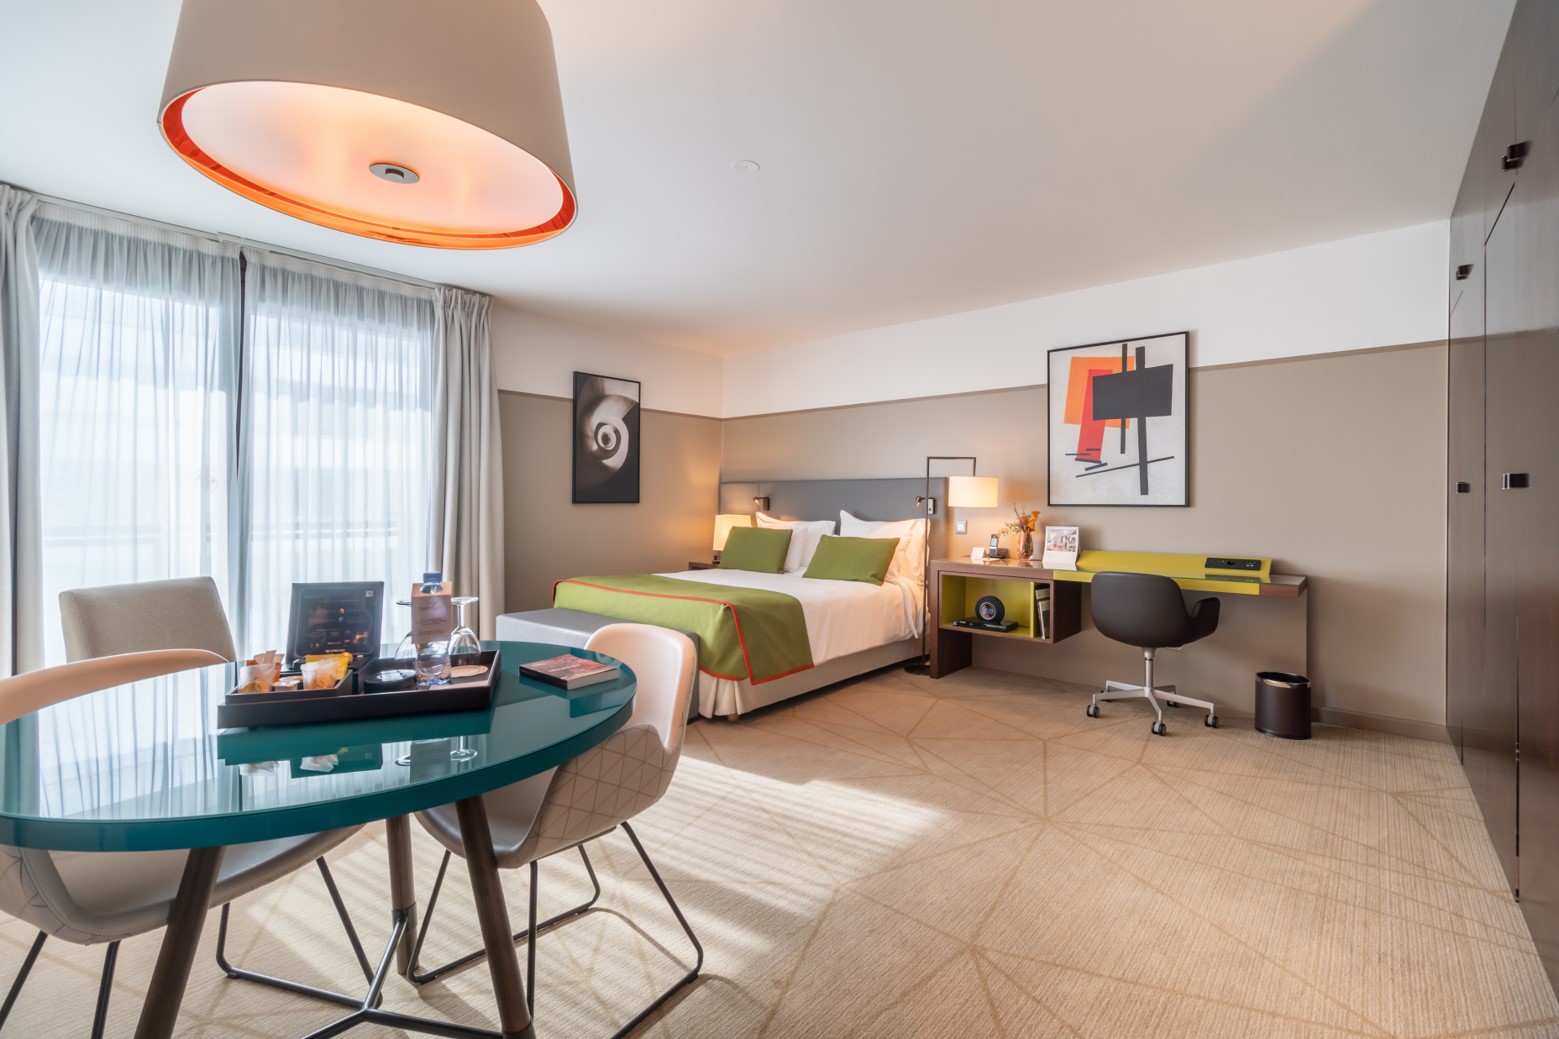 Studio Deluxe apartments of Fraser Suites Harmonie - serviced hotel in La Défense Paris